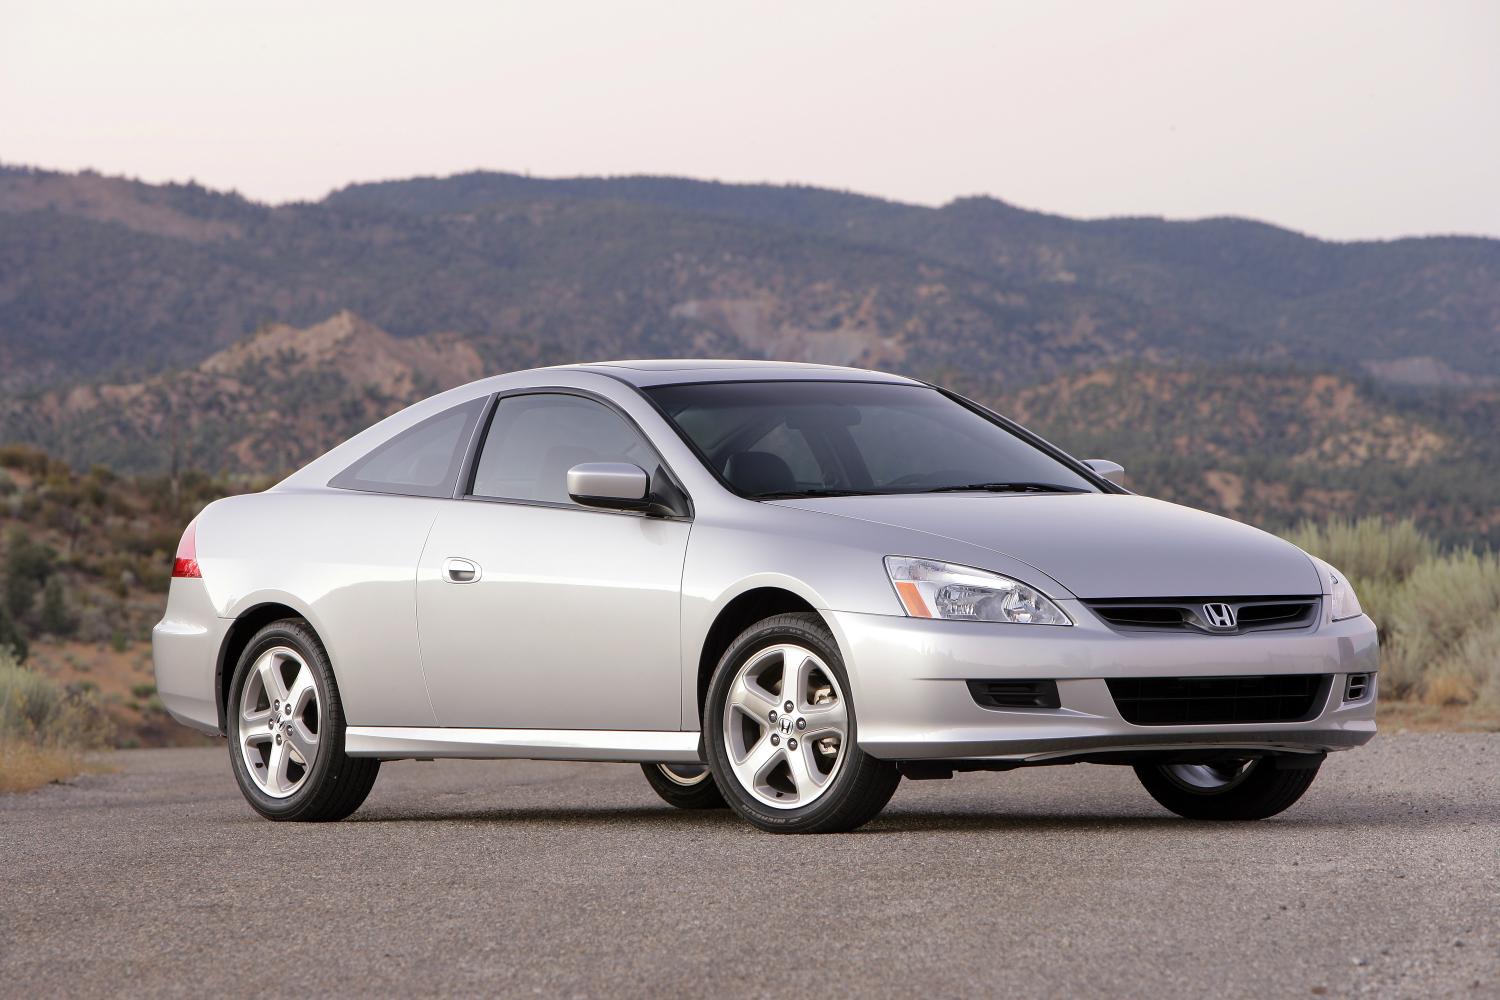 Honda civic airbags recall #6